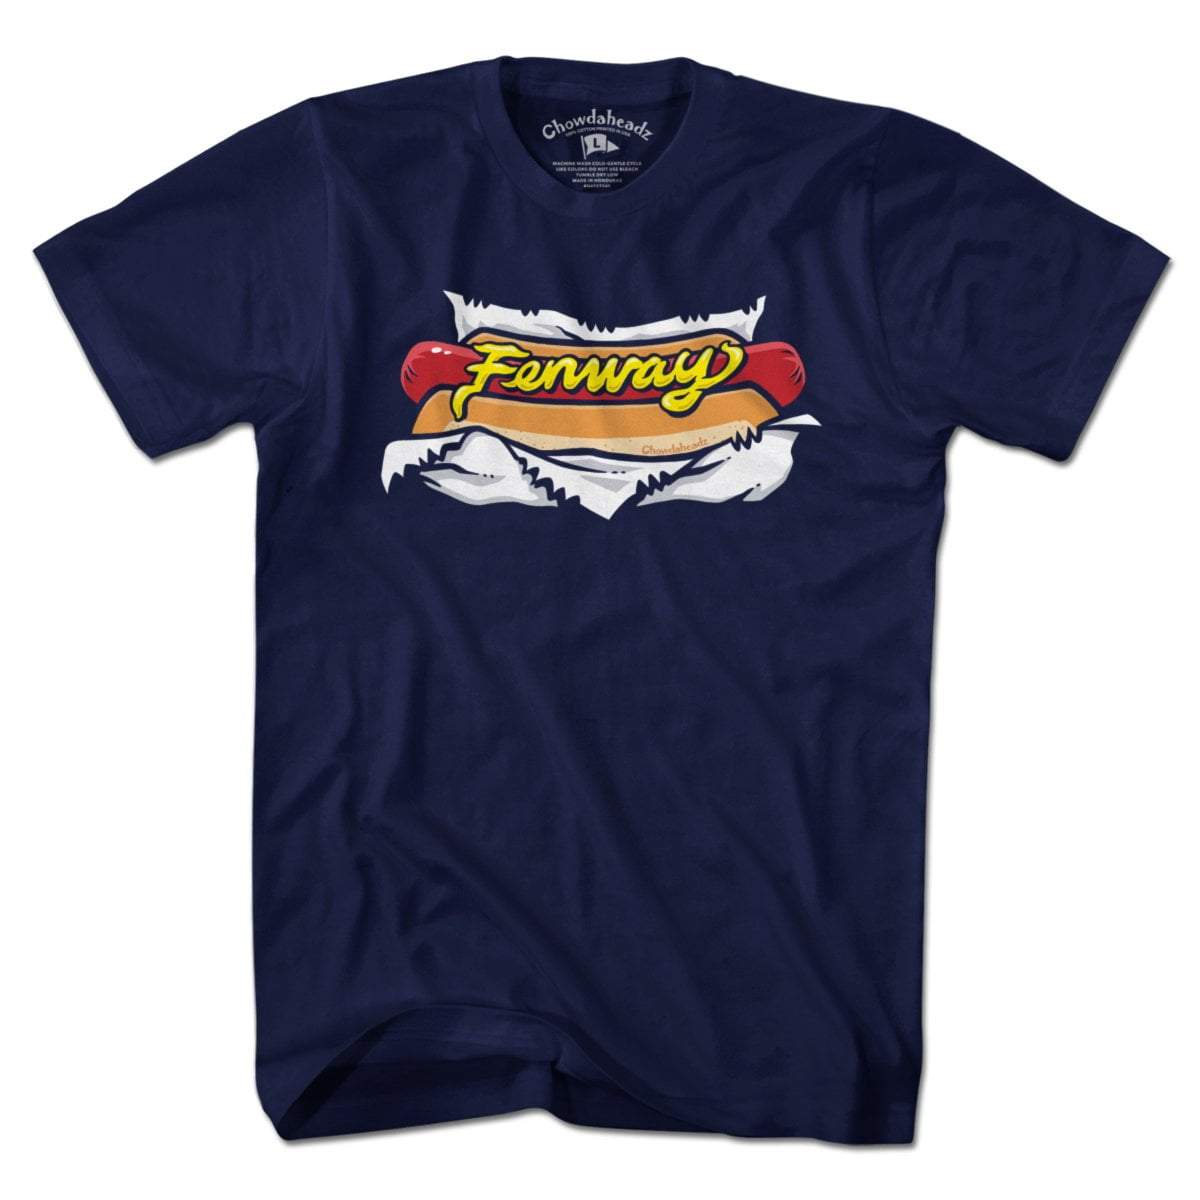 Fenway Hot Dog T-Shirt - Chowdaheadz